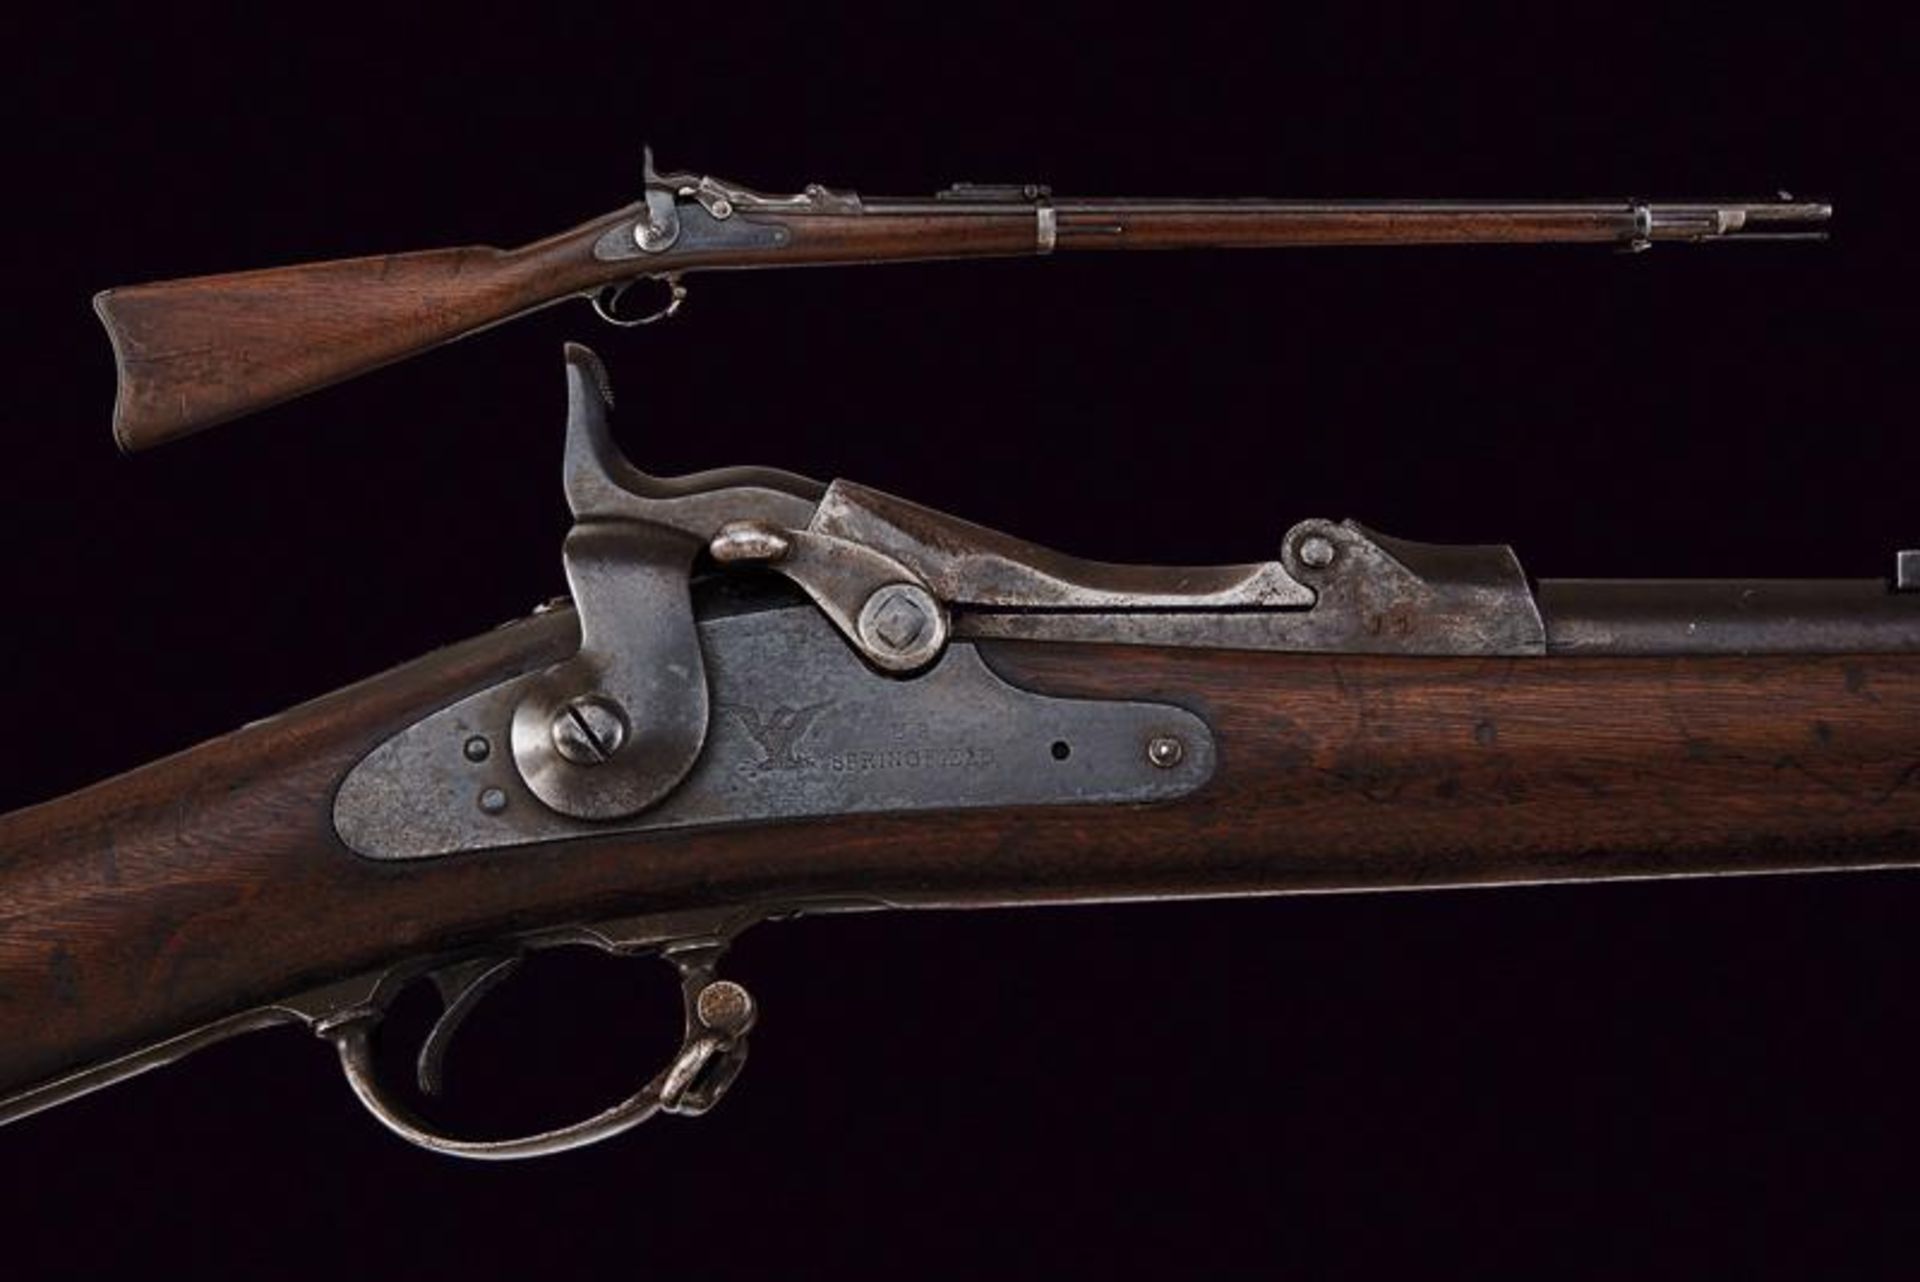 An 1873 model Springfield Trapdoor rifle